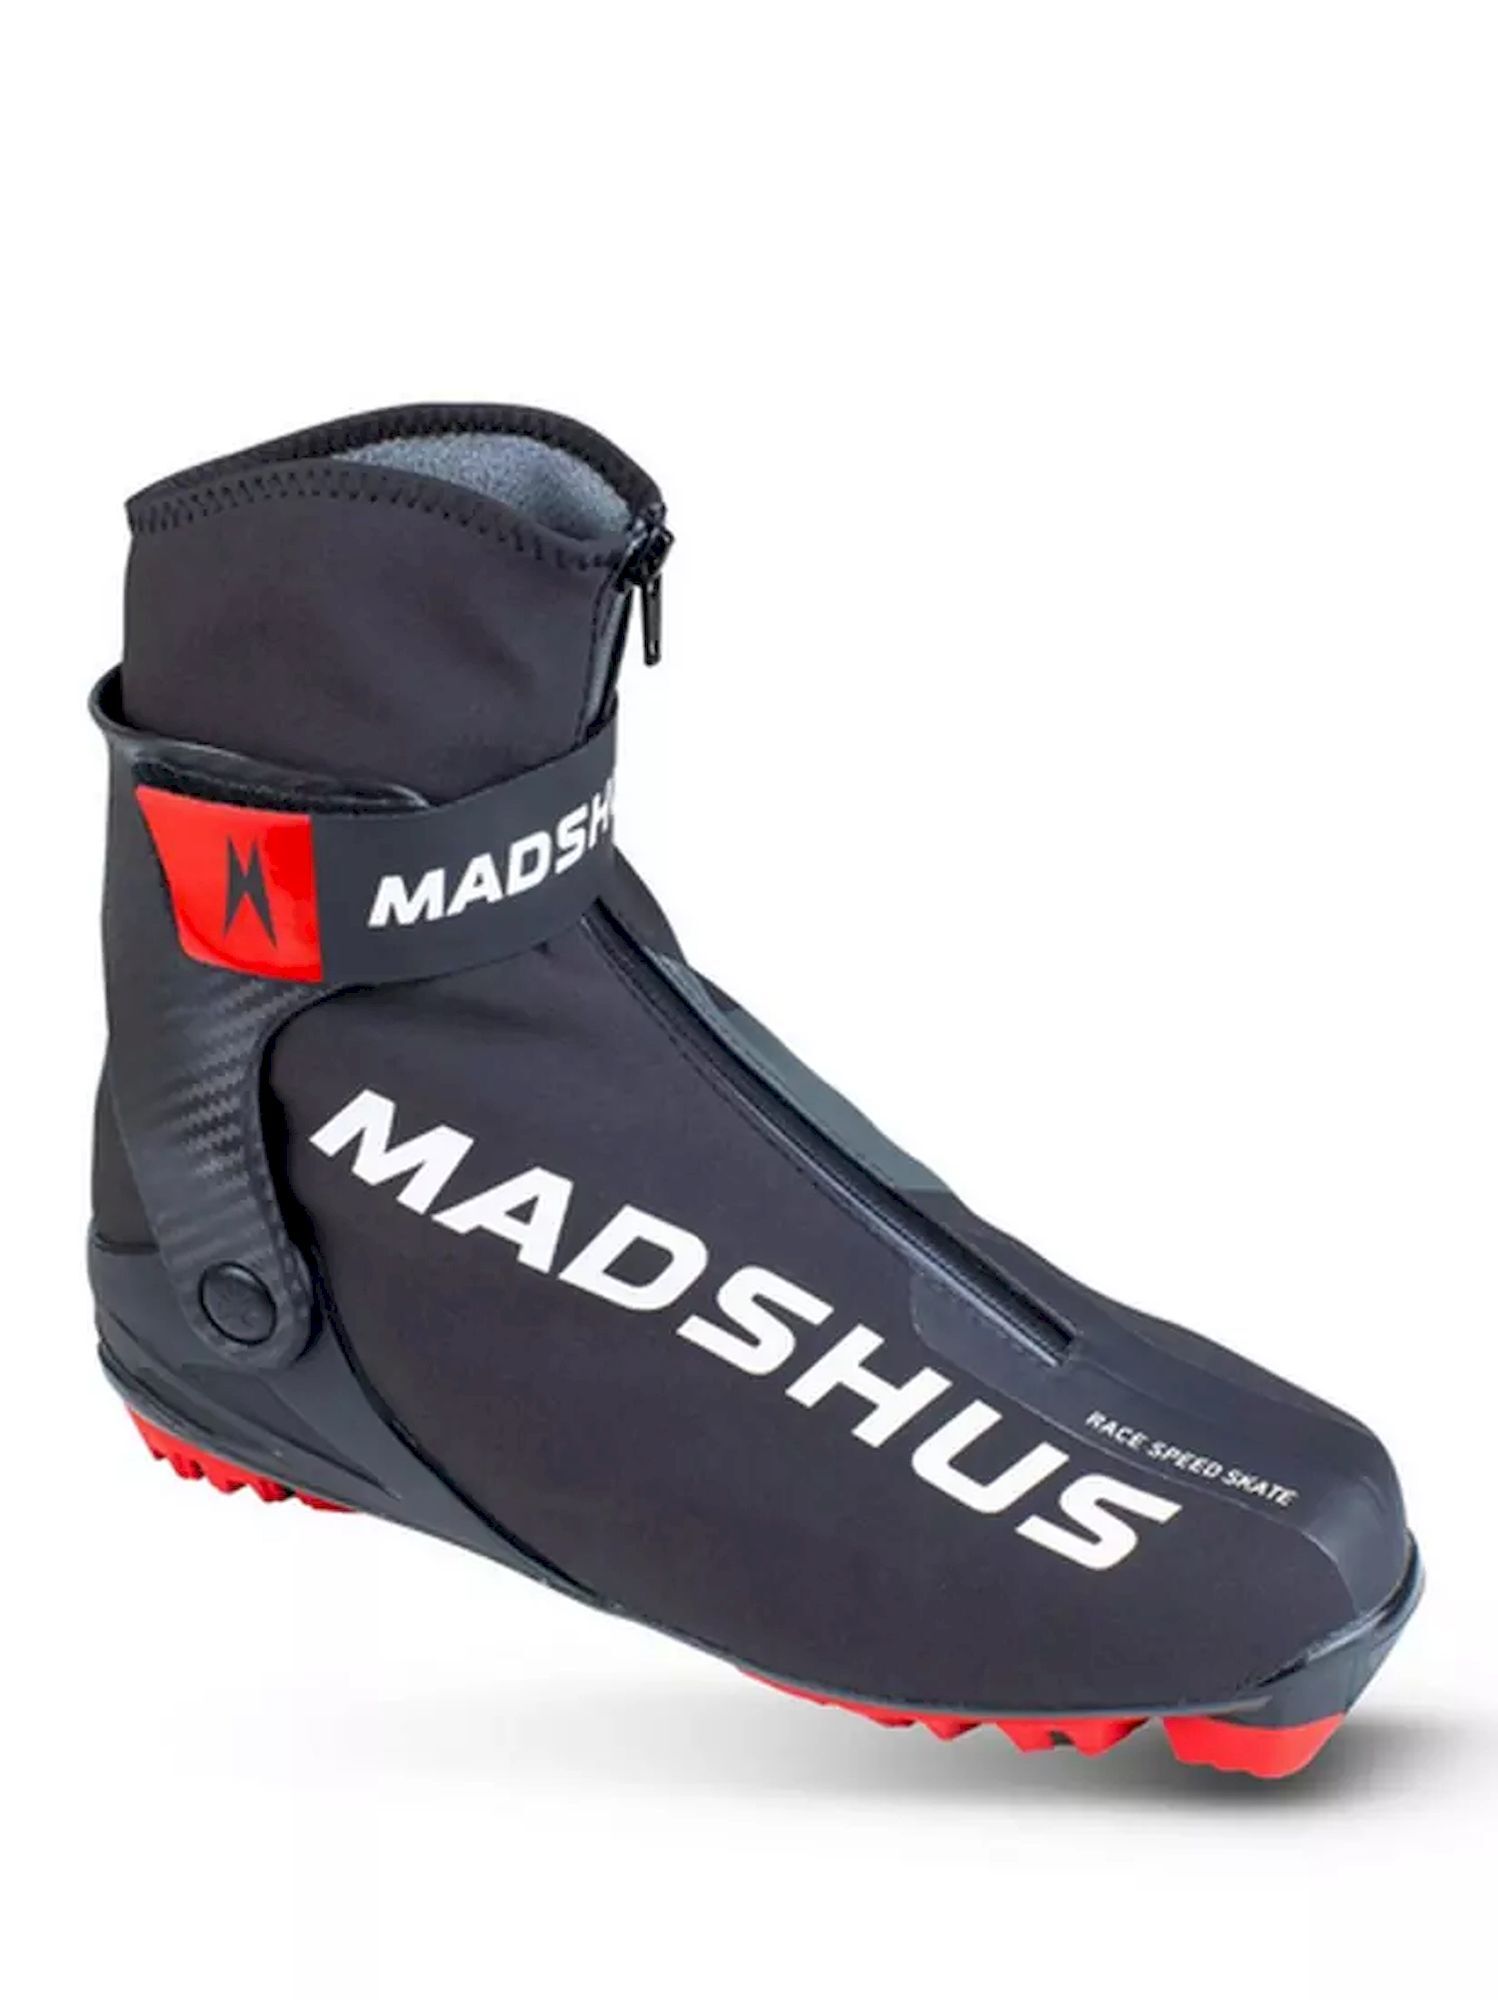 Madshus Race Speed Skate - Scarponi sci di fondo | Hardloop